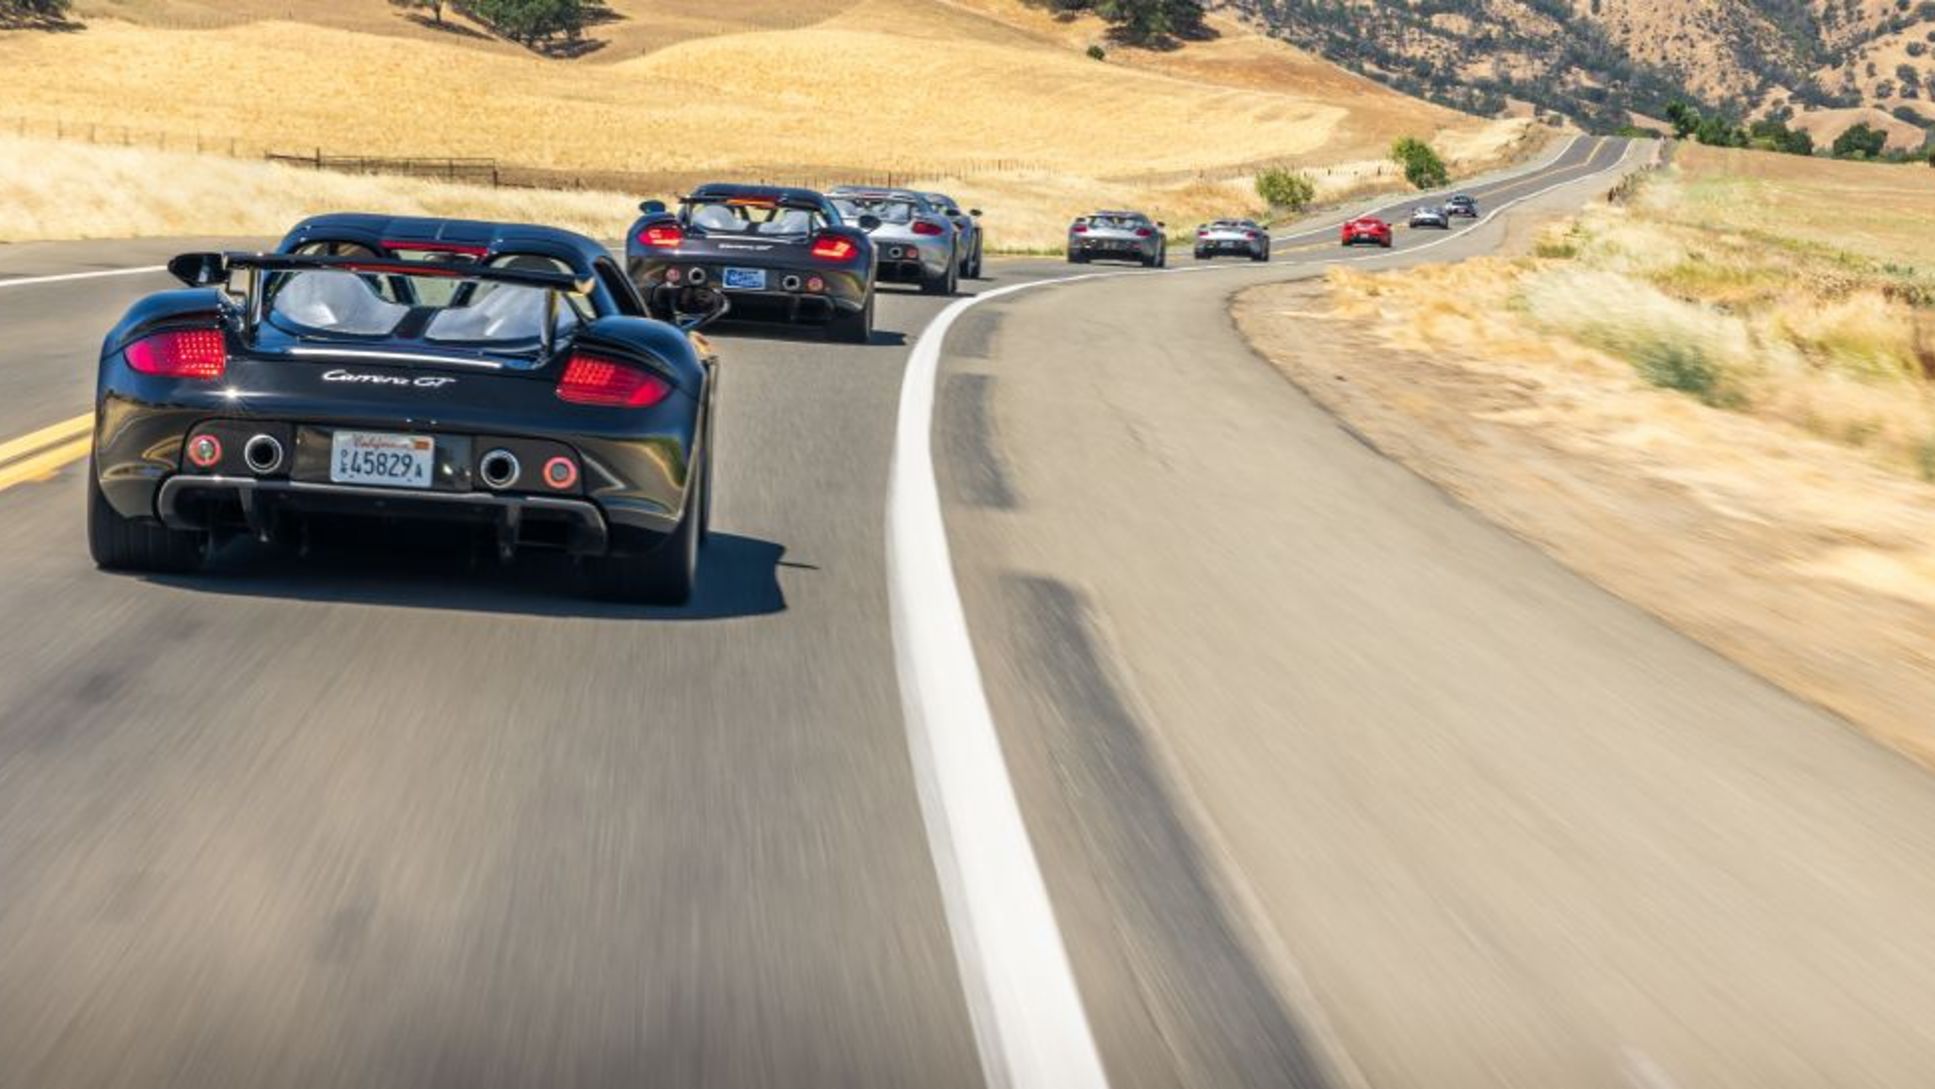 Nine wonders in Napa: welcome to the Carrera GT Rally - Porsche Newsroom USA